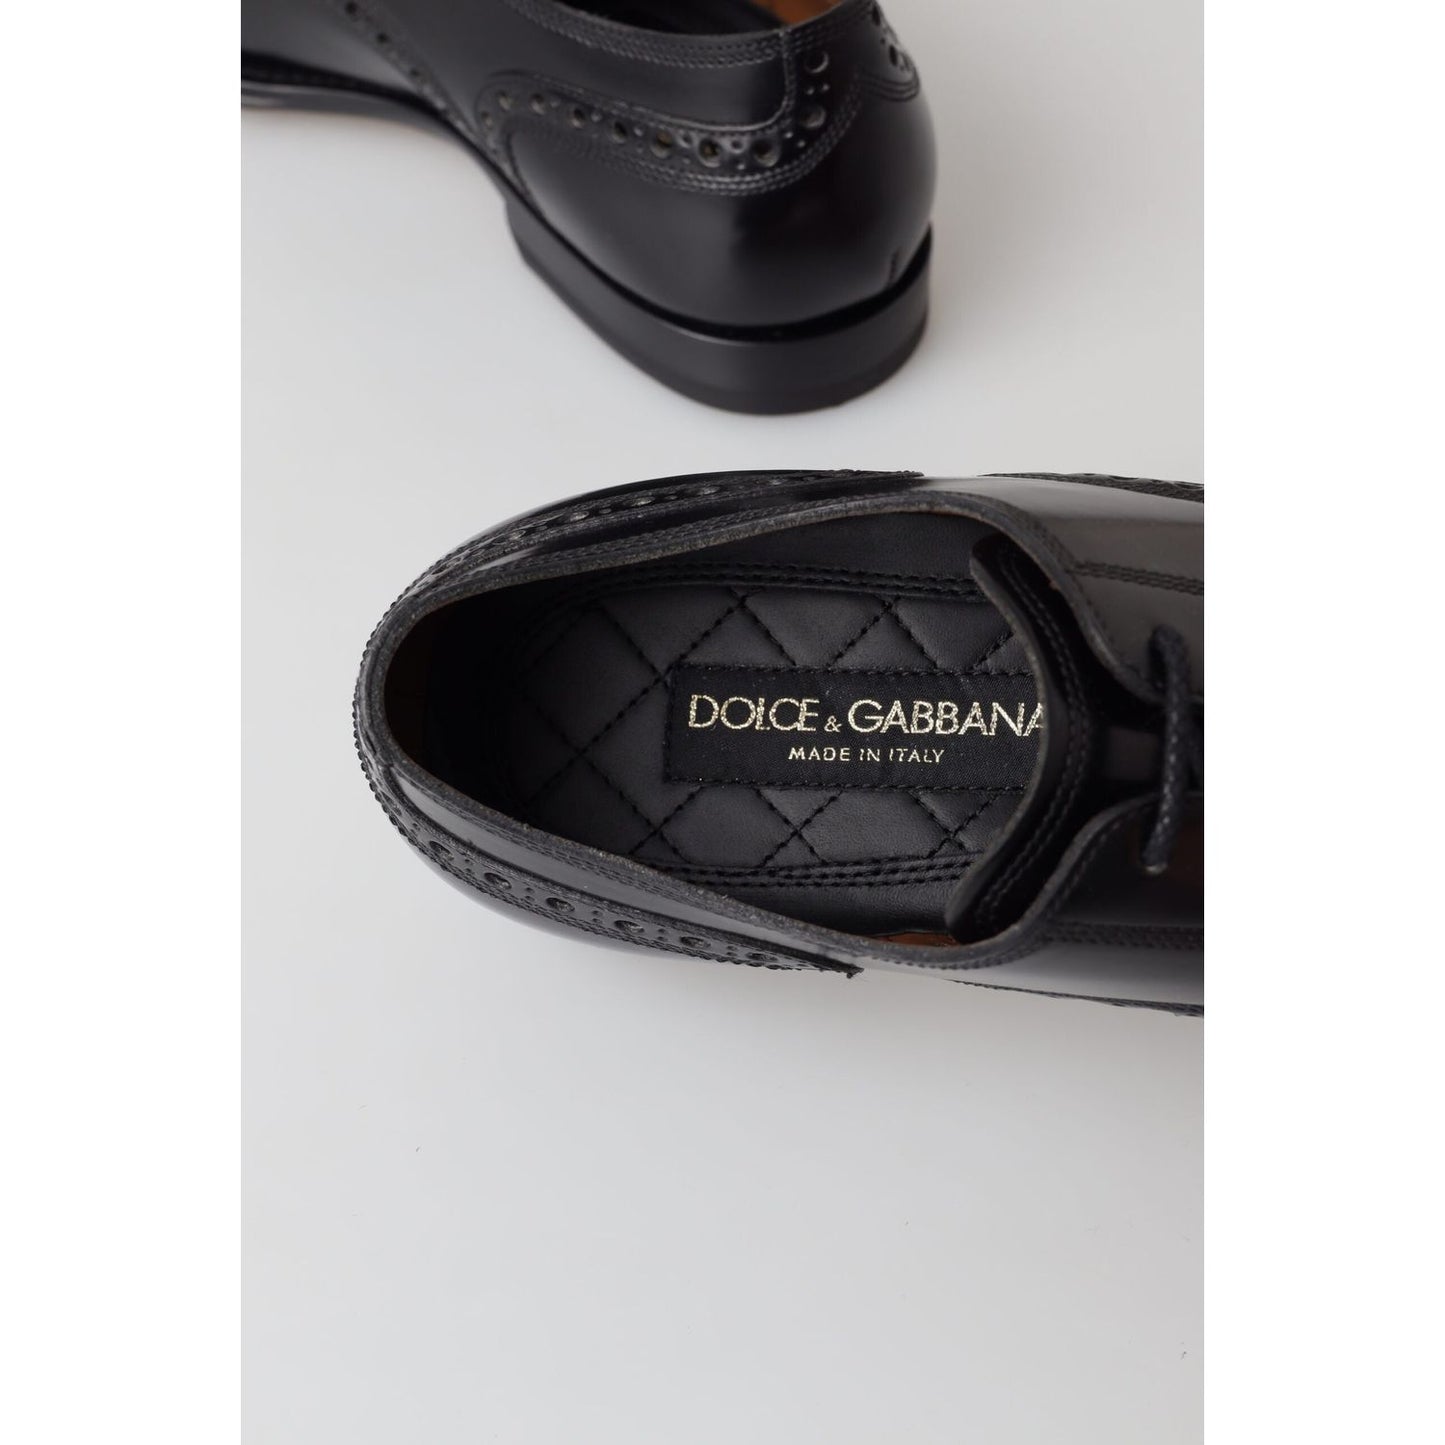 Dolce & Gabbana Elegant Black Leather Oxford Wingtip Shoes black-leather-oxford-wingtip-formal-derby-shoes-1